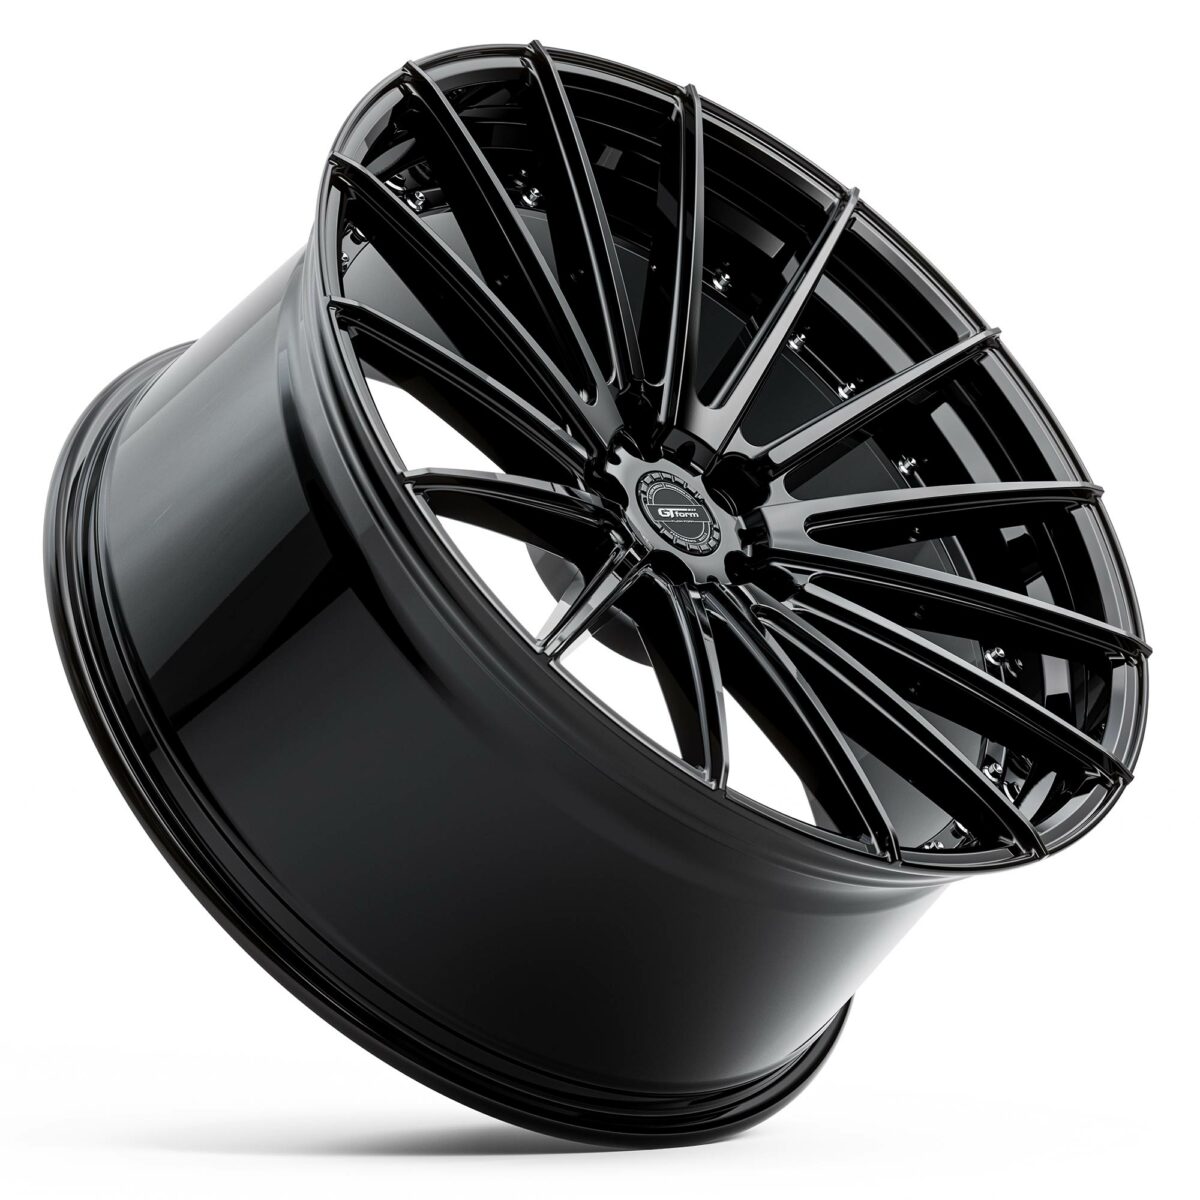 GT Form Anvil Gloss Black 22 inch Rims Performance Wheels Car SUV